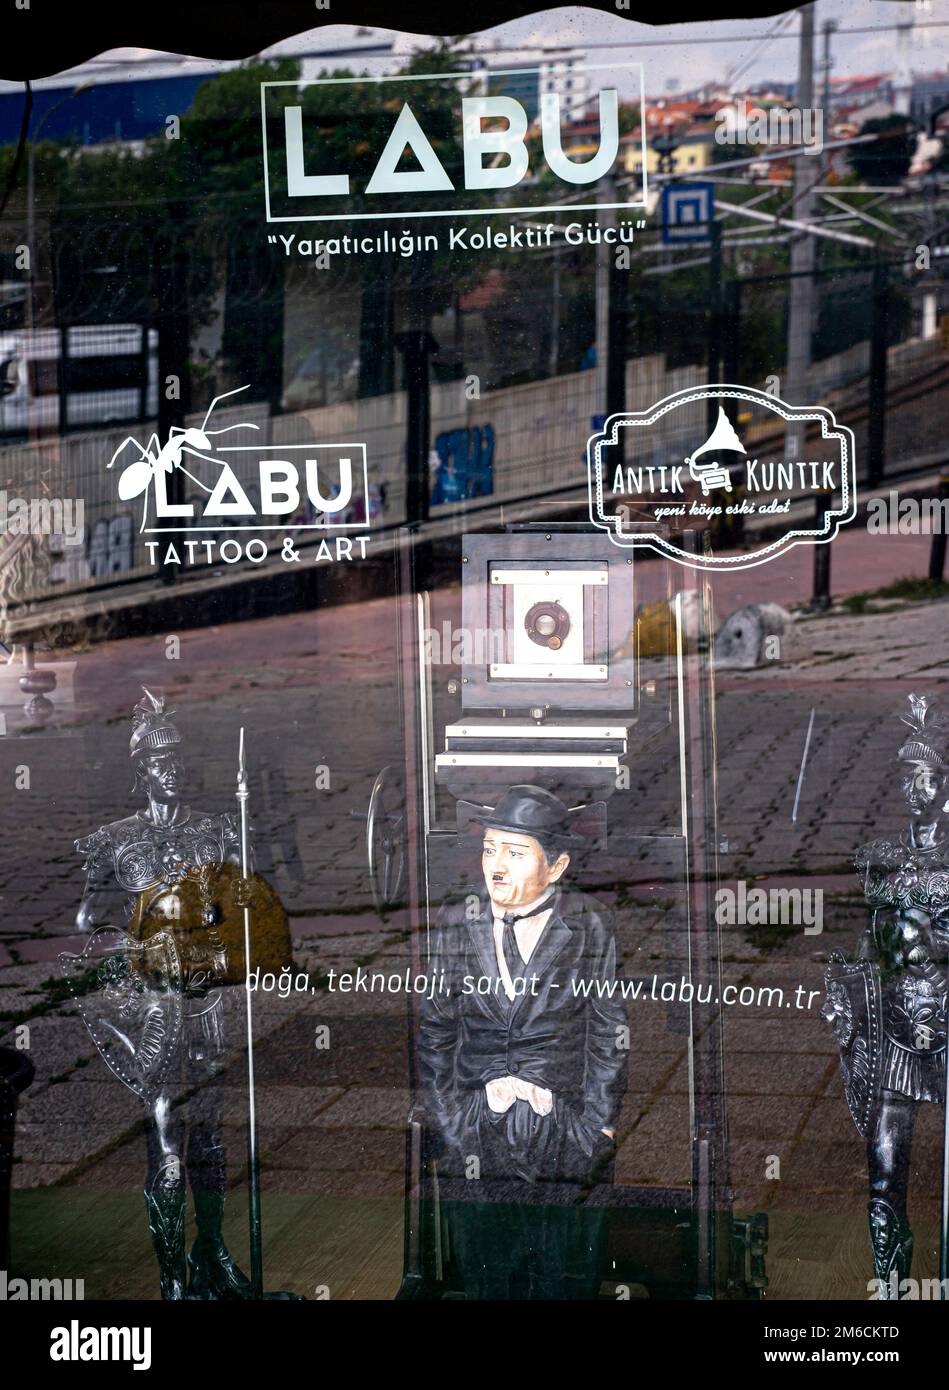 Antiques shop, tatto salon Labu shop window. Kadikoy, Istanbul Turkey Stock Photo